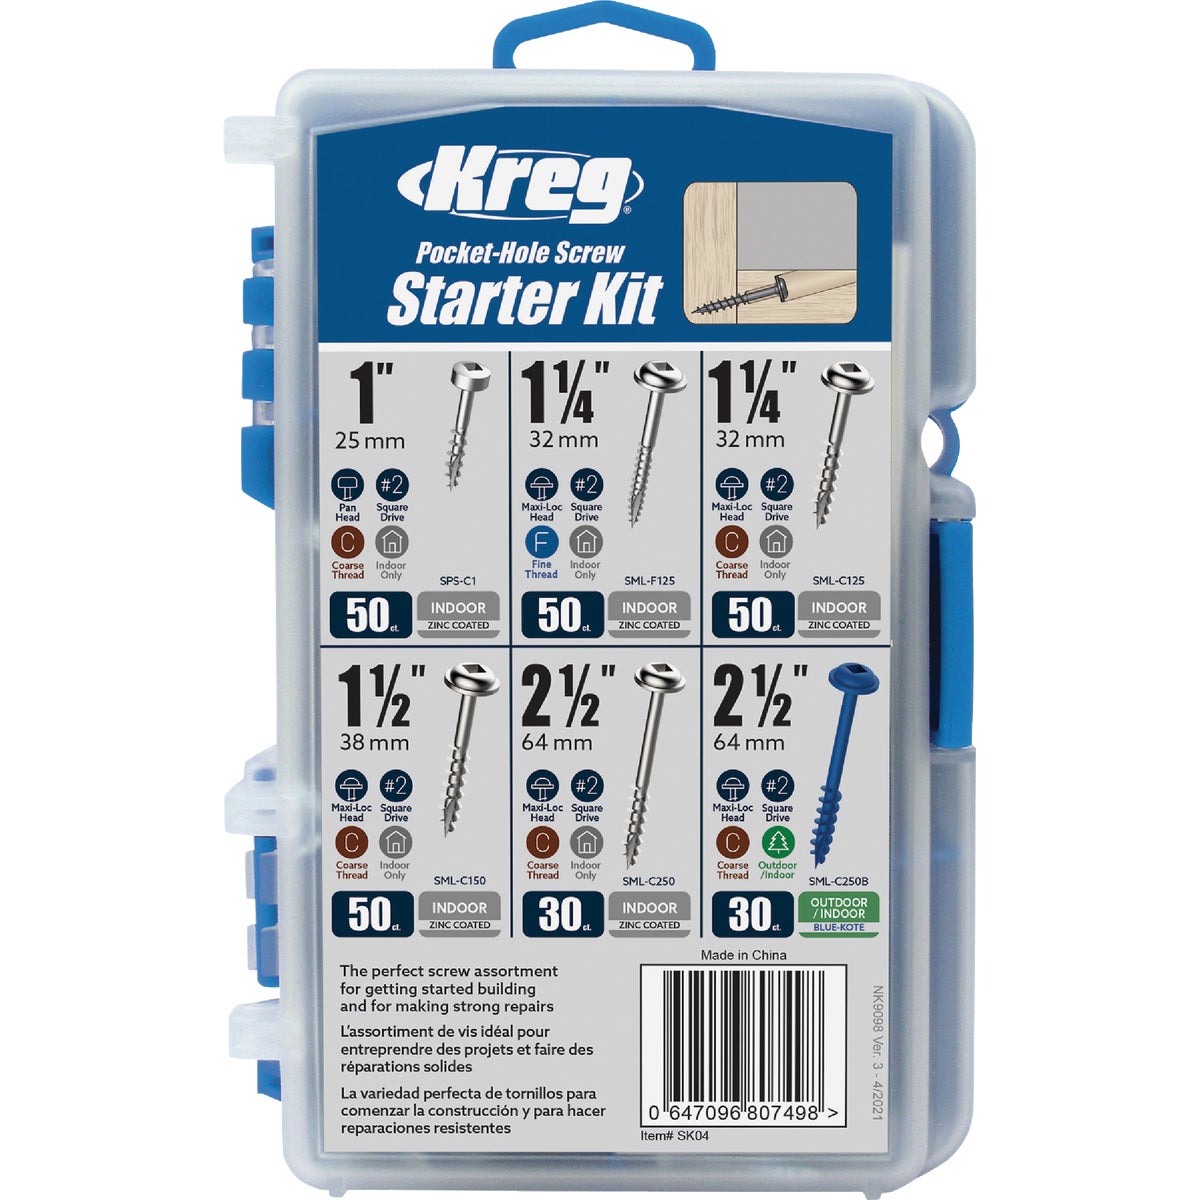 Item 388746, The Kreg Pocket-Hole Screw Starter Kit provides a right-sized, right-priced